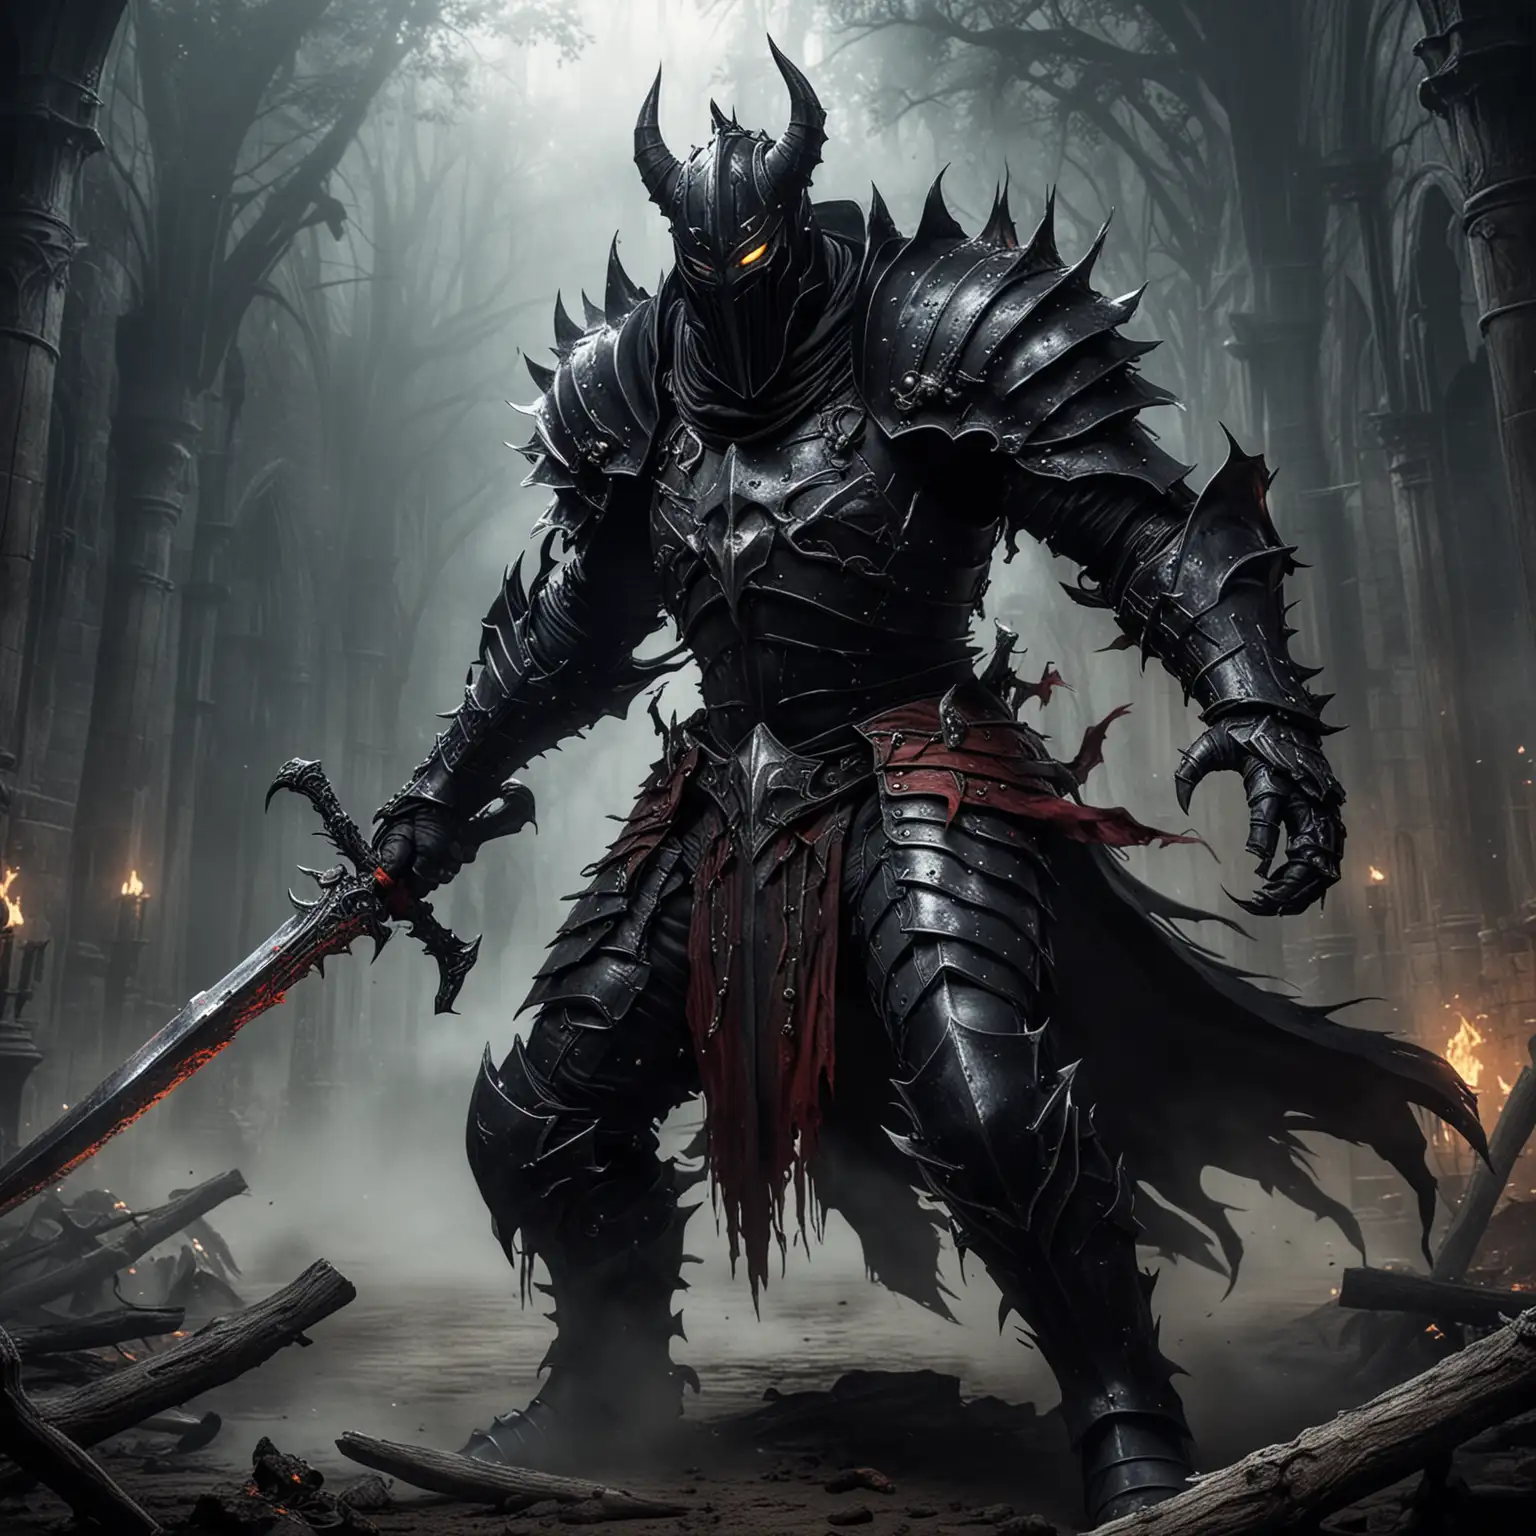 Gothic Black Knight Battling a Monster